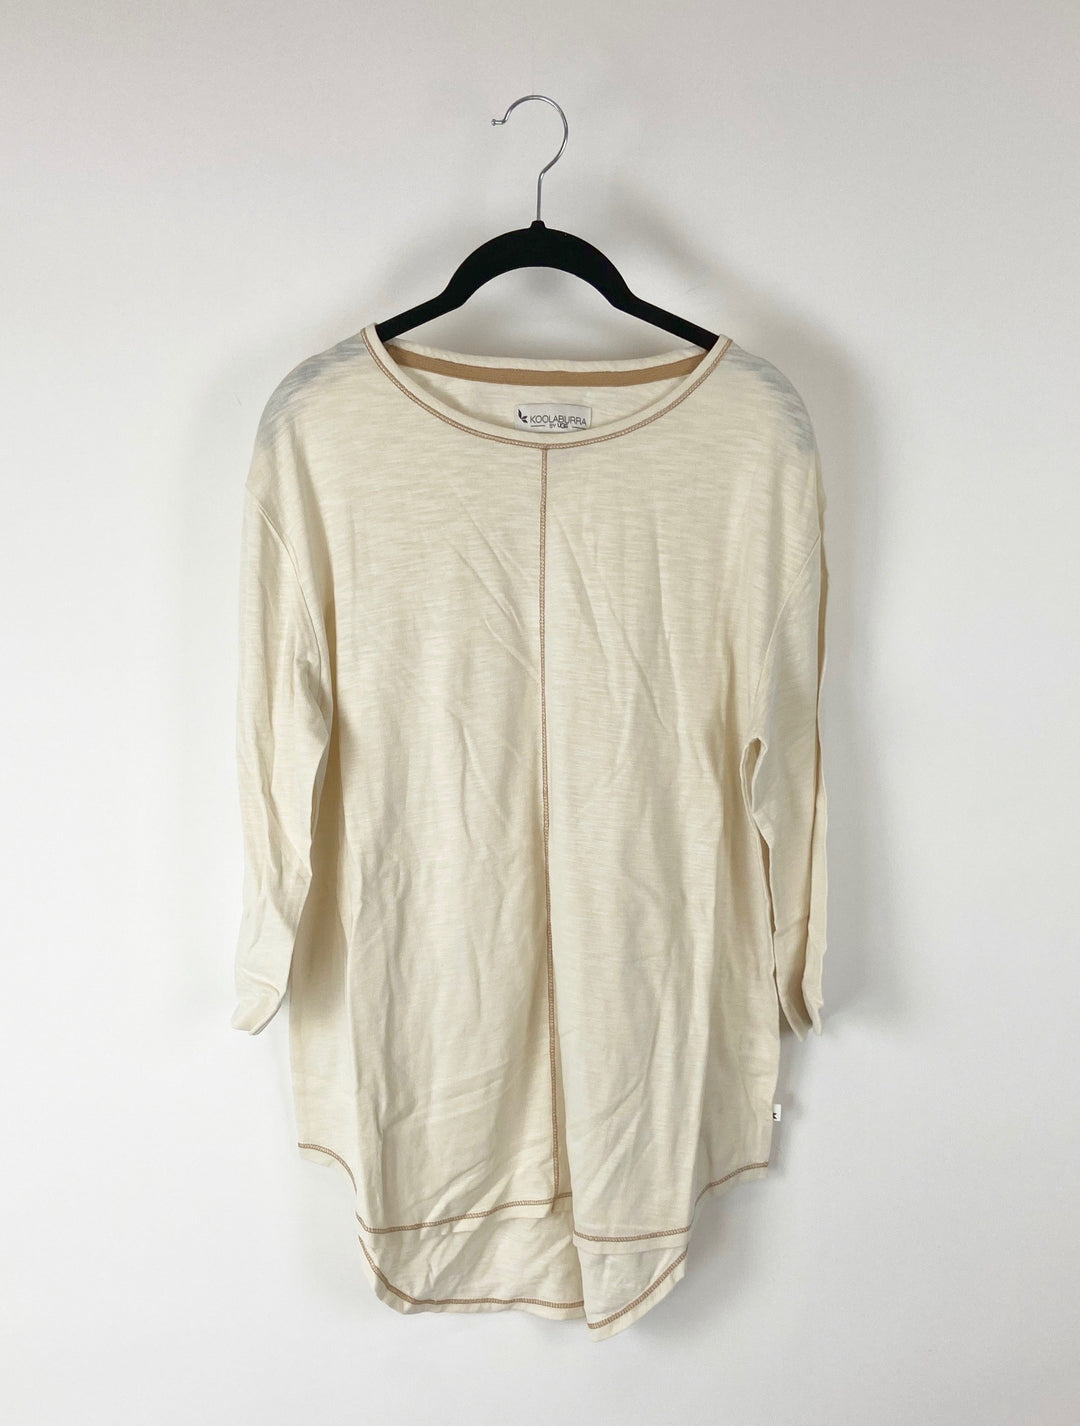 Cream Colored 3/4 Sleeve Shirt - Small & 1X